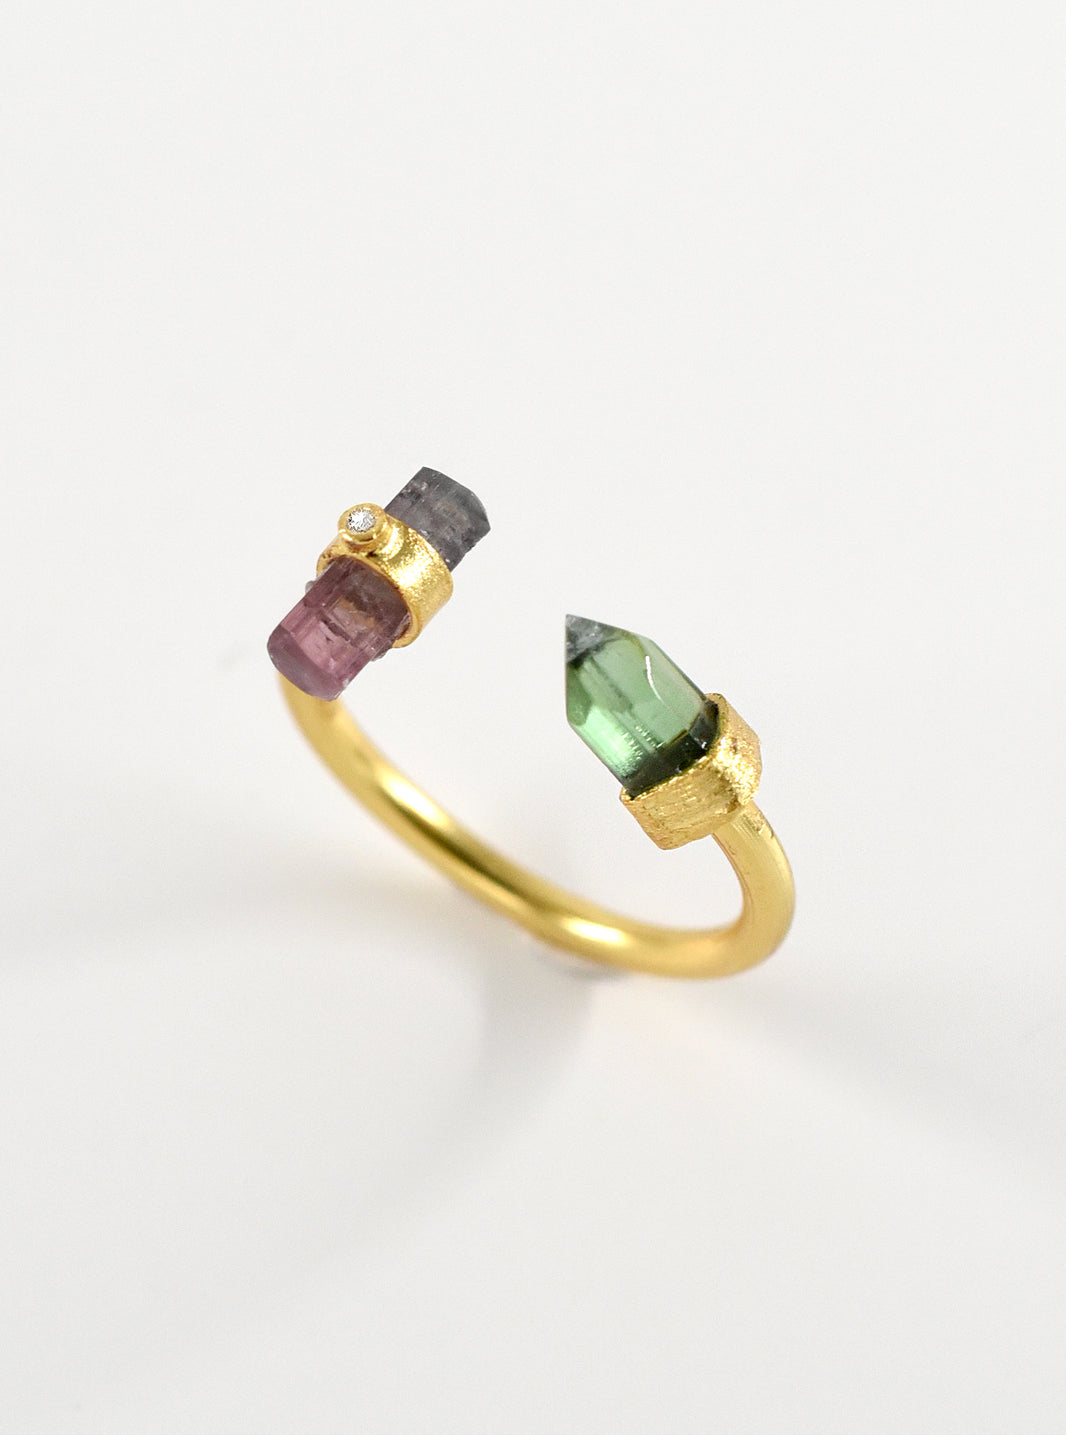 Best Online Adjustable Rings Store | Rings for Women By Felix Z Design ...